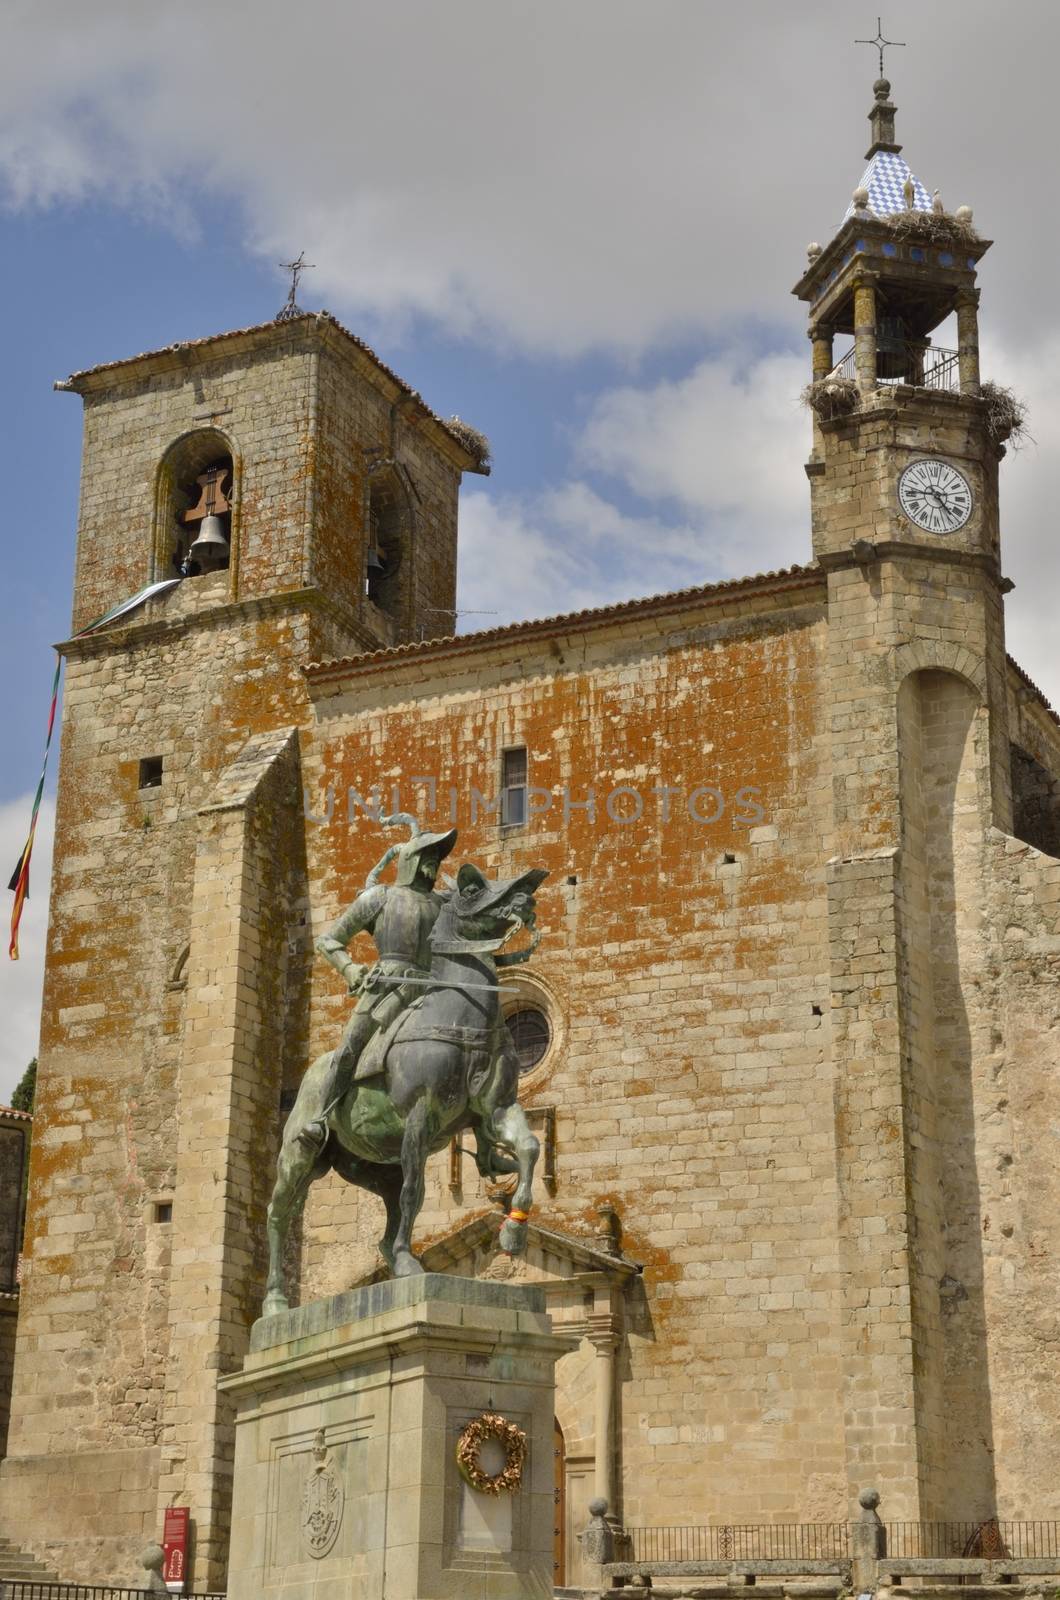 Equestrian statue of Francisco Pizarro, Spanish conqueror, in front of a church in the main square of Trujillo, Caceres, Spain.